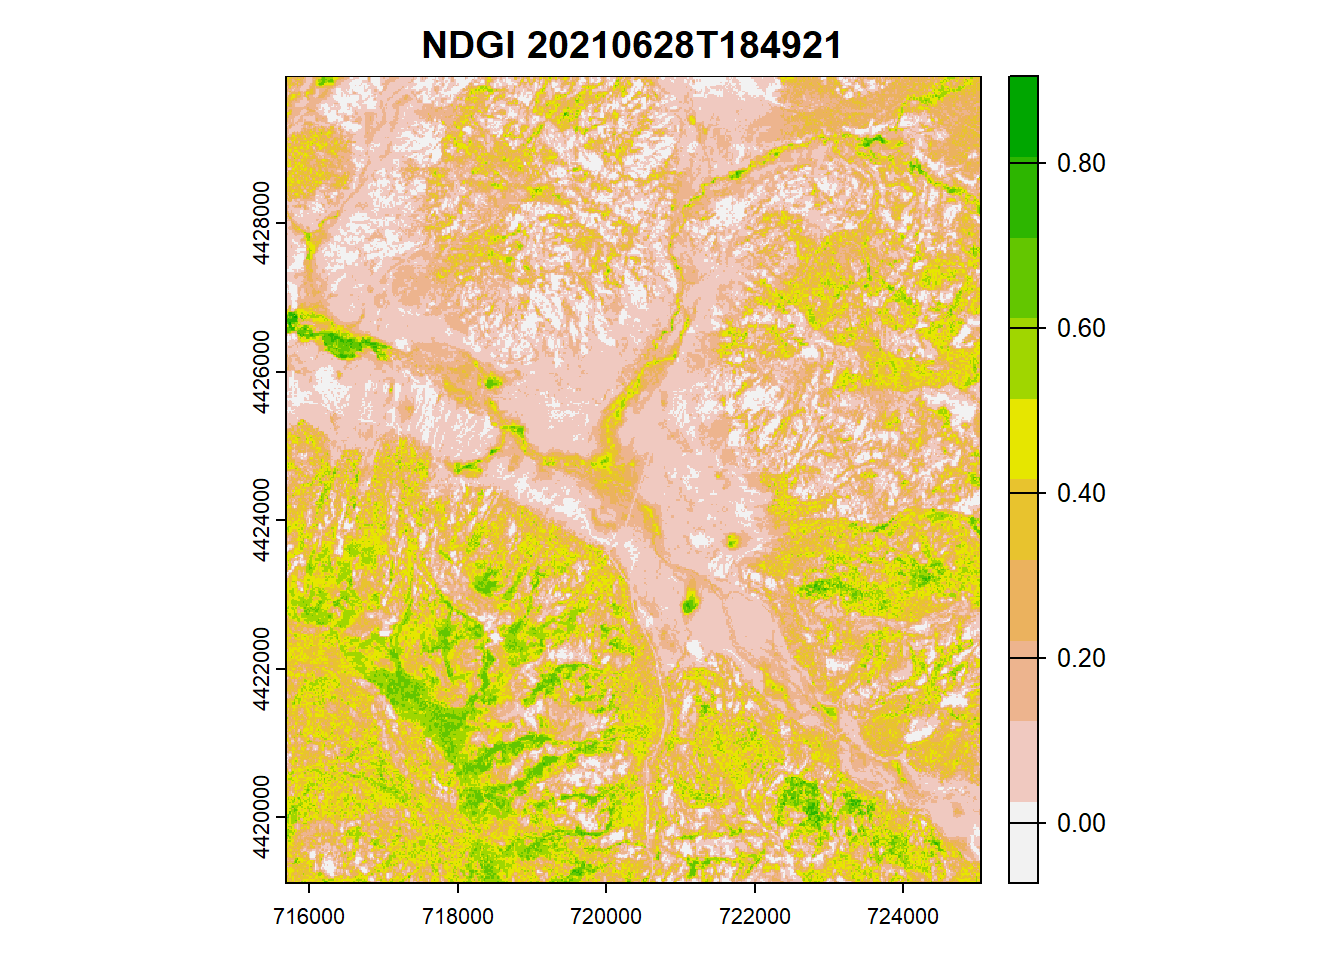 NDGI from Sentinel-2 image, 20210628